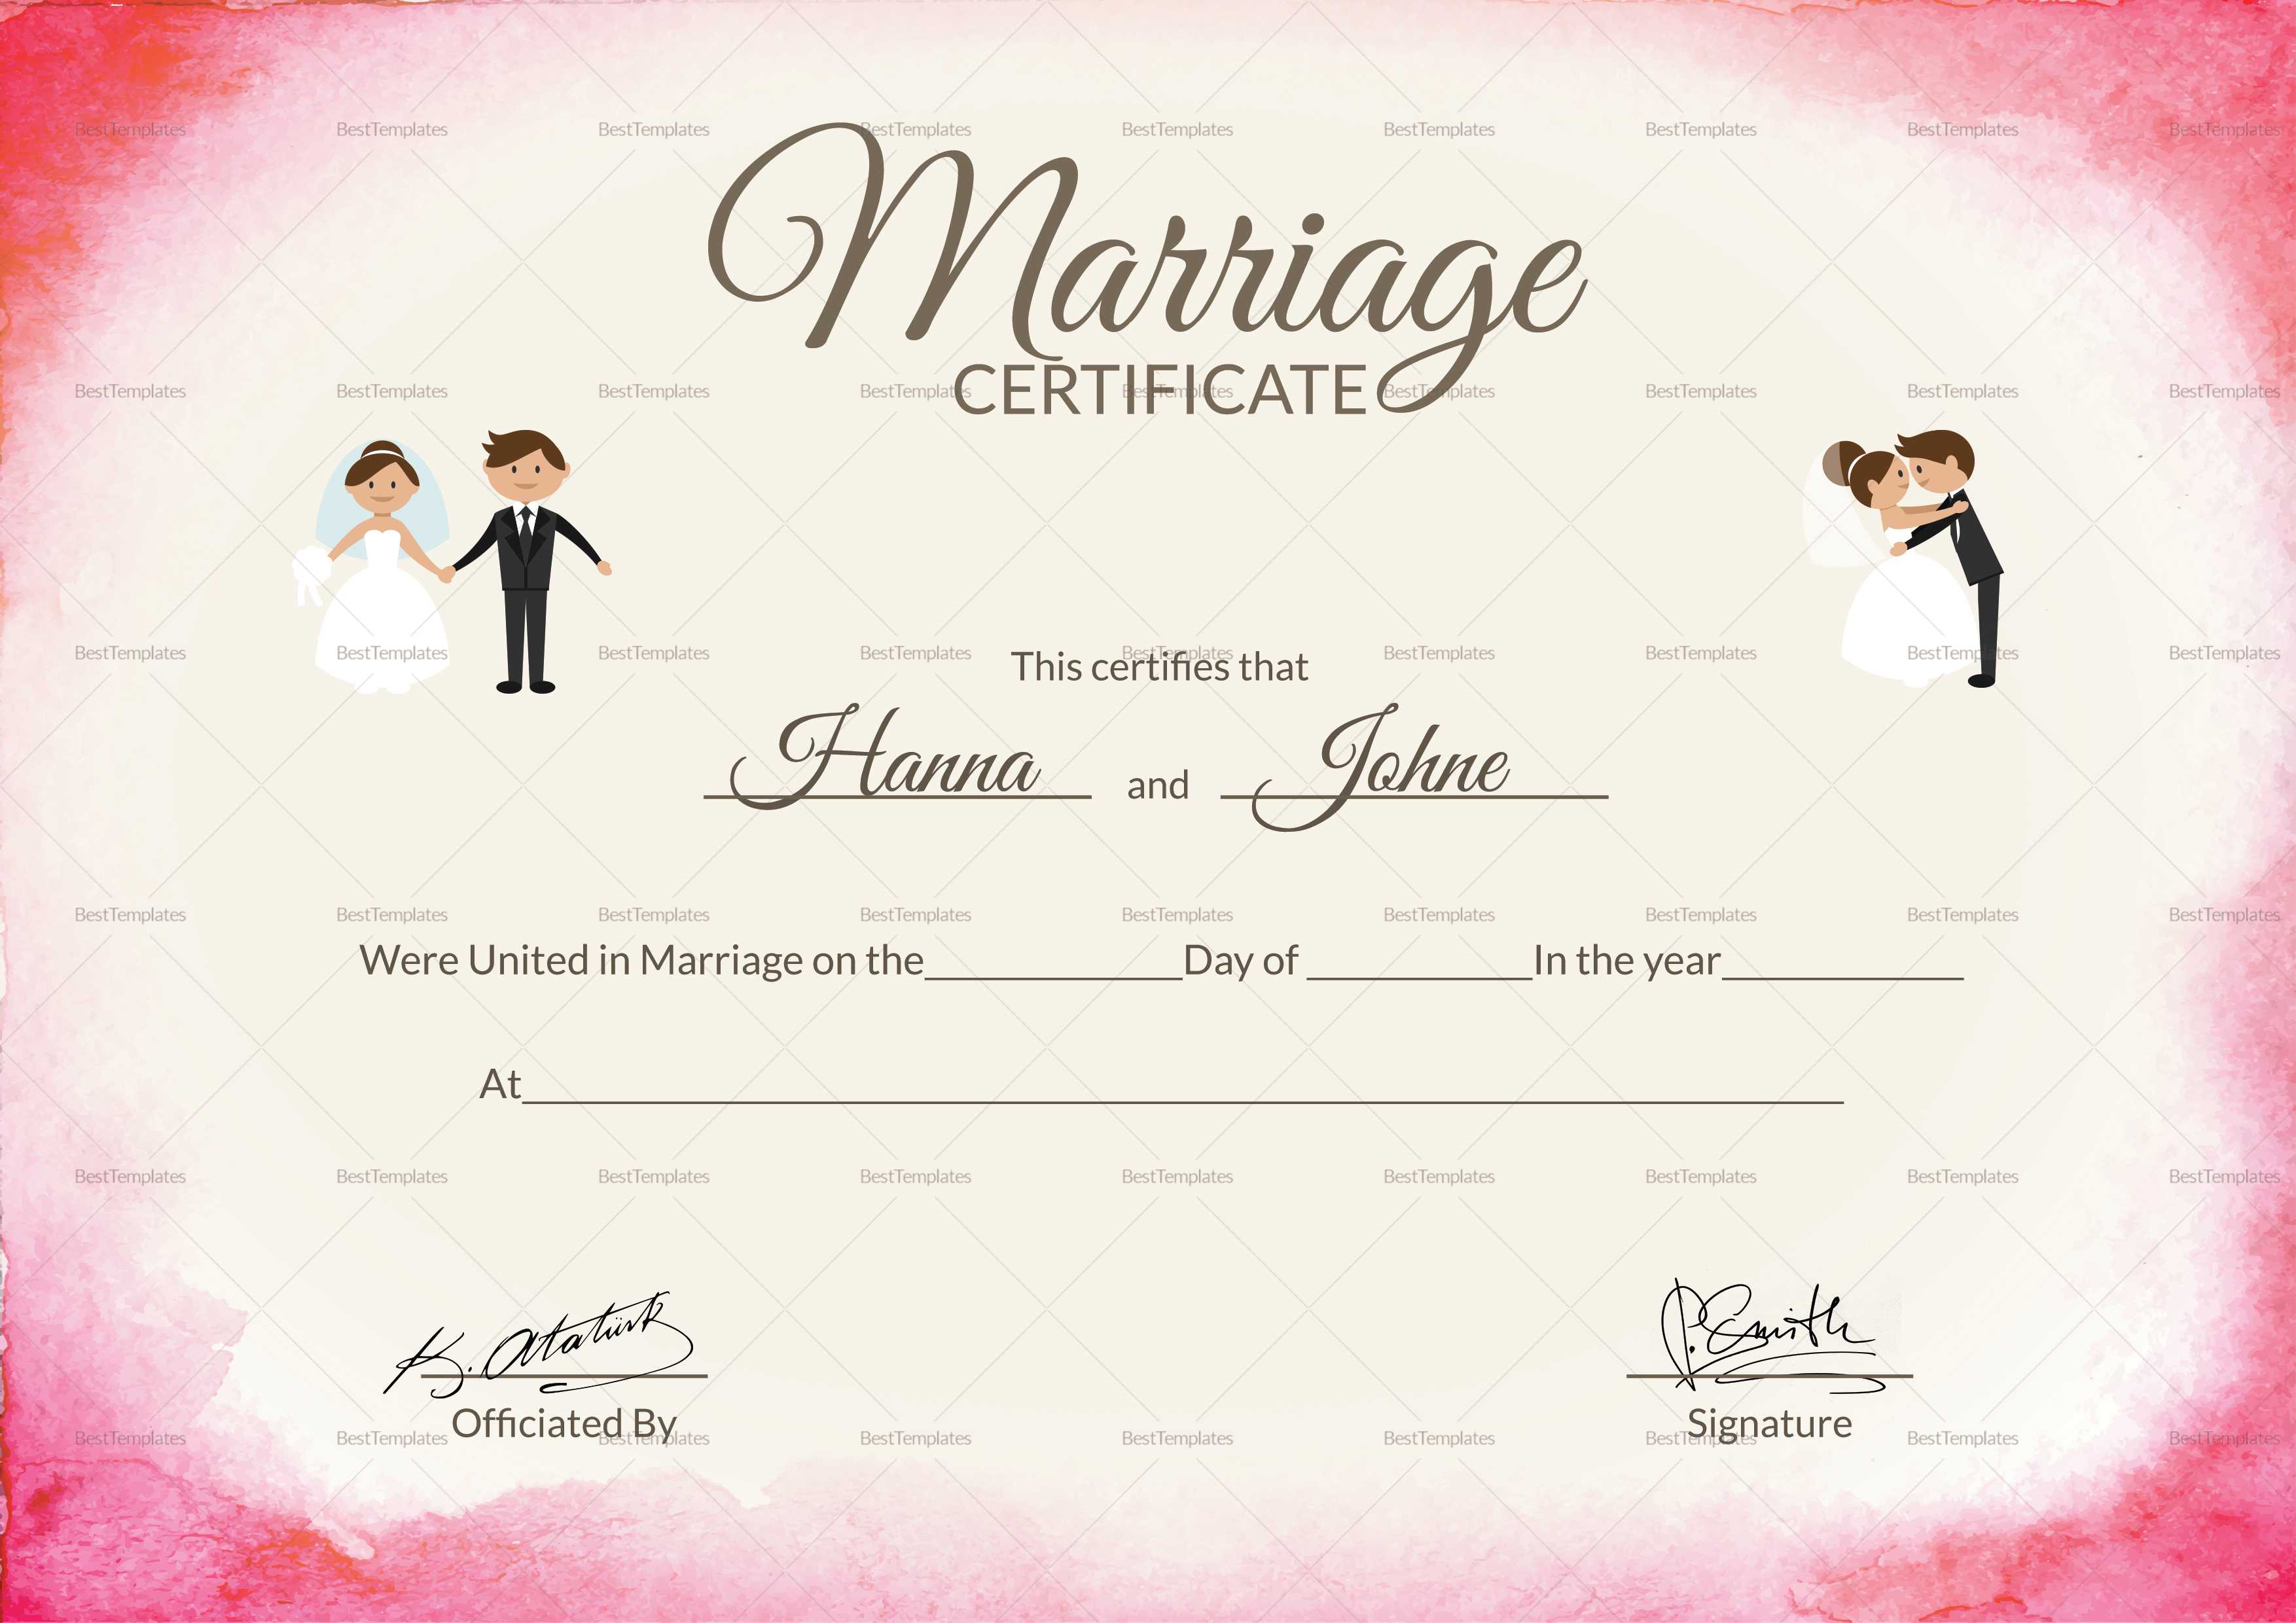 Elegant Marriage Certificate Template Throughout Certificate Of Marriage Template